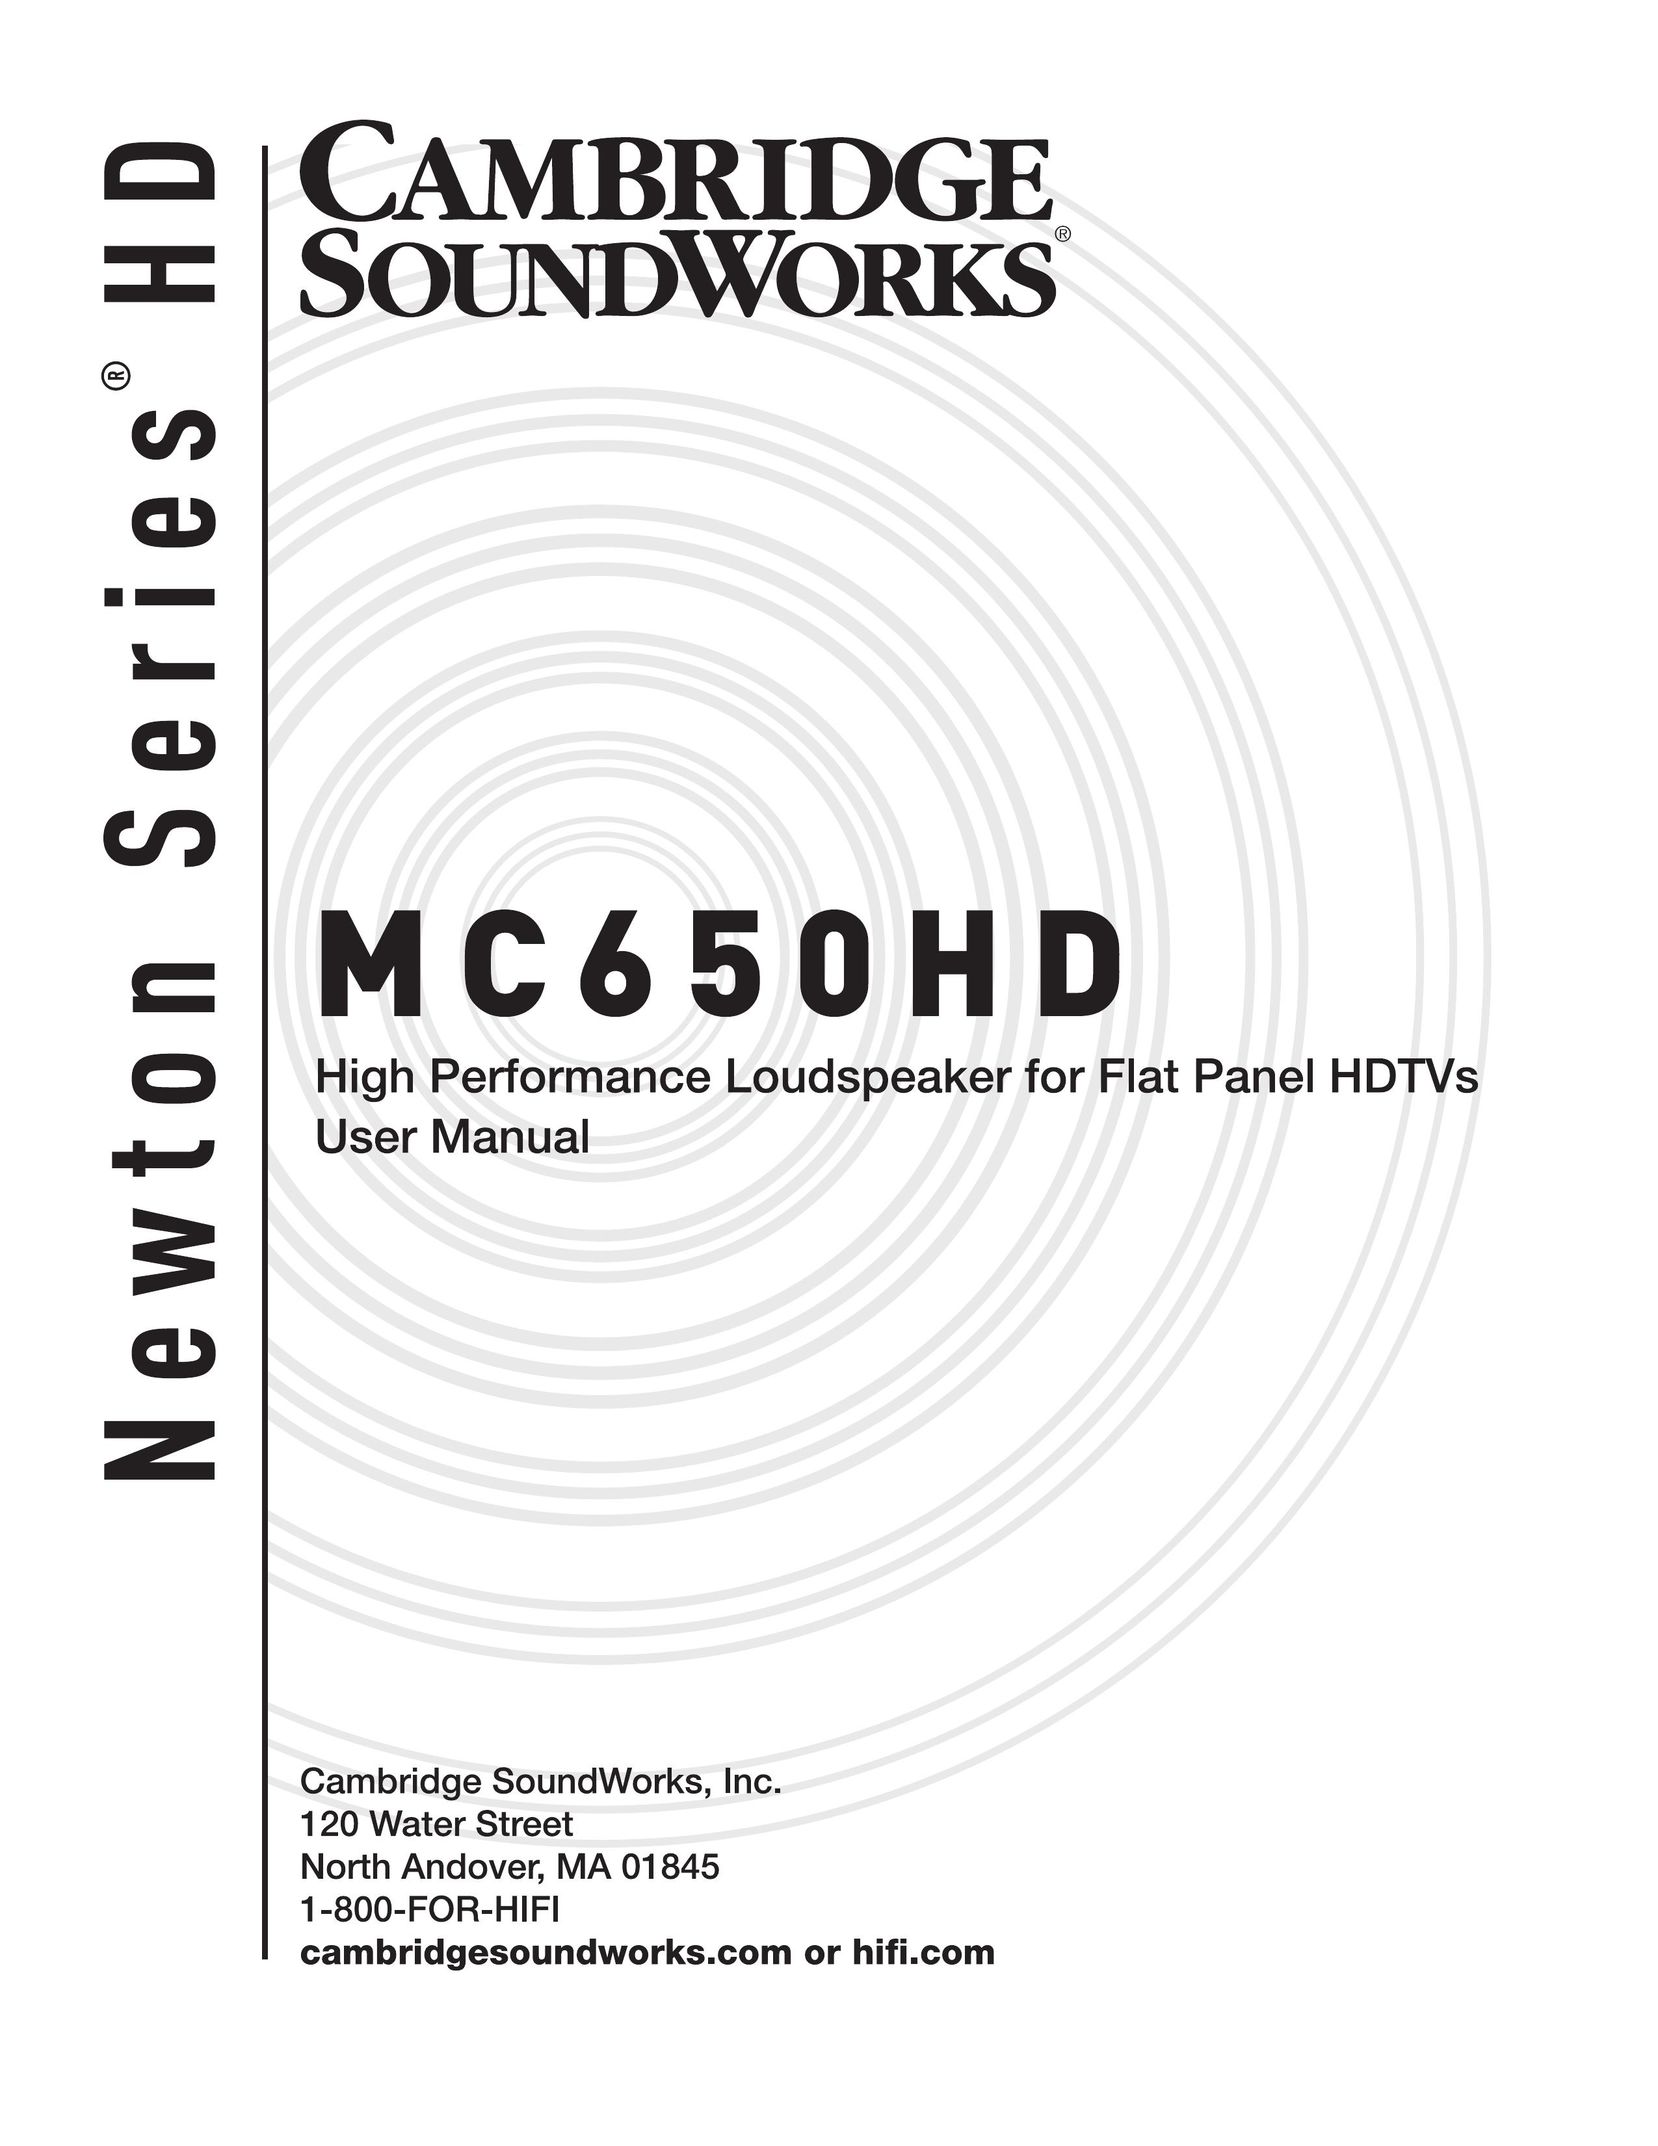 Cambridge SoundWorks MC650HD Exercise Bike User Manual